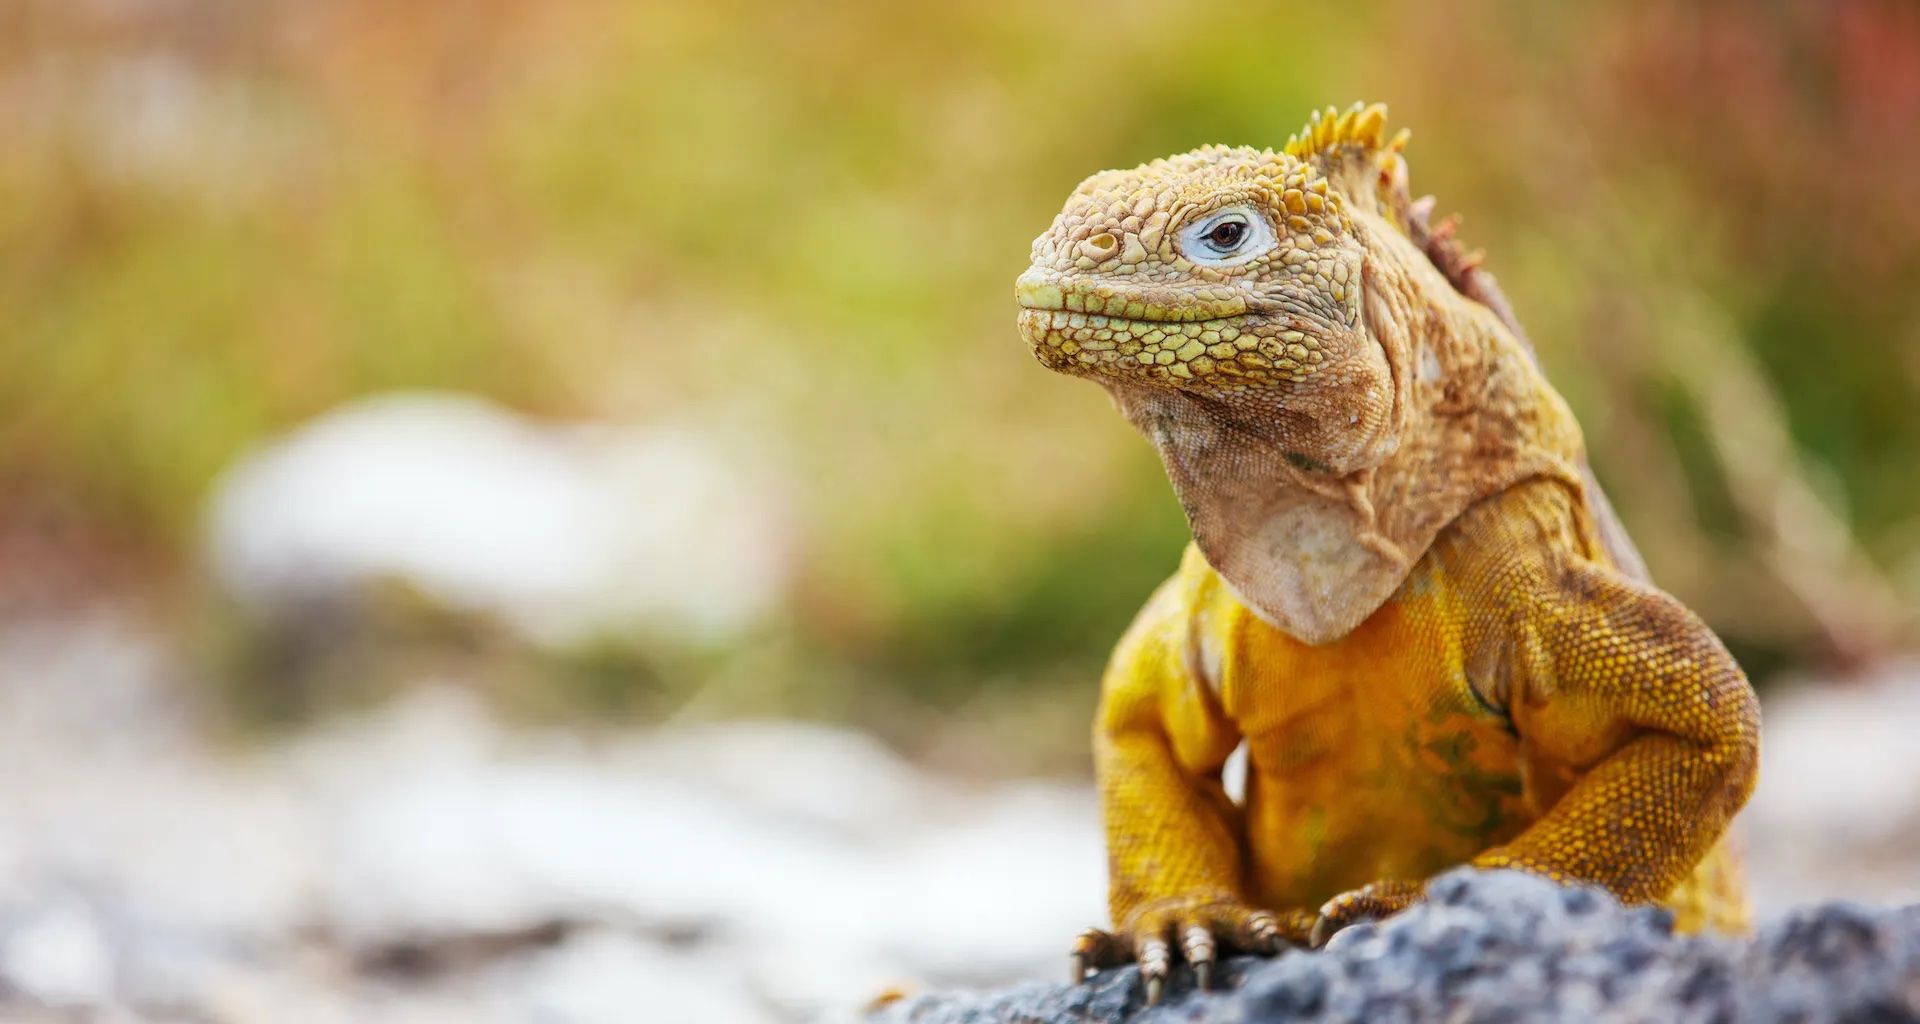 The Galapagos land iguana, posing on a rock.